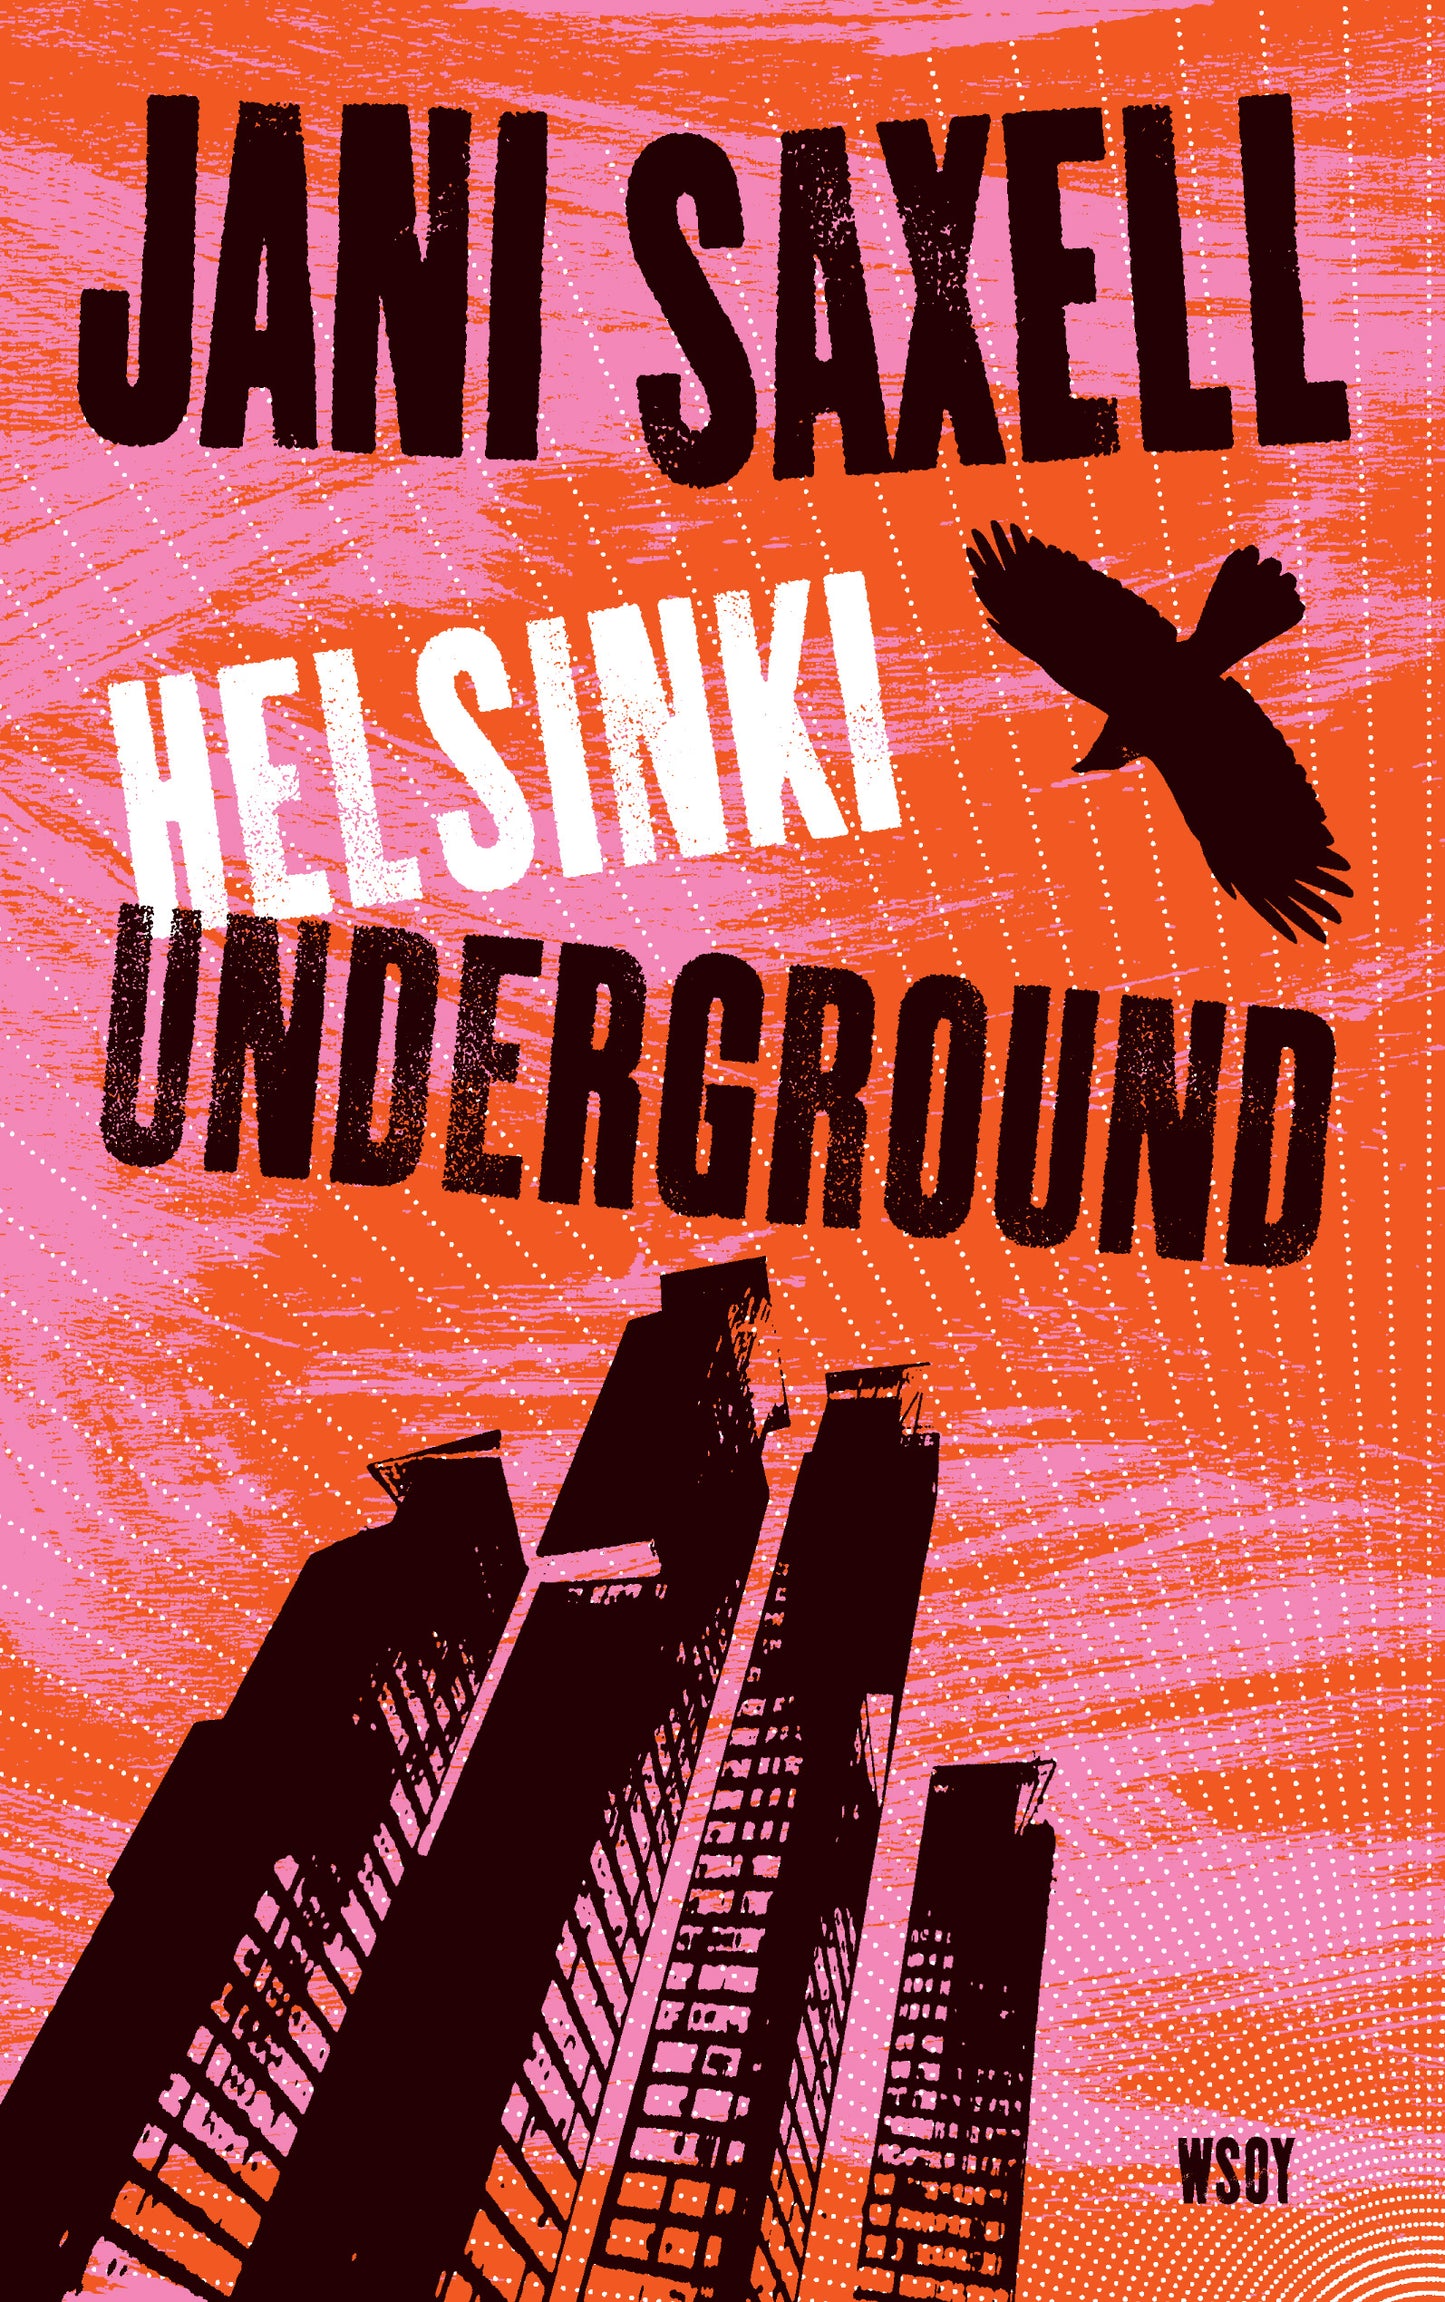 Helsinki Underground